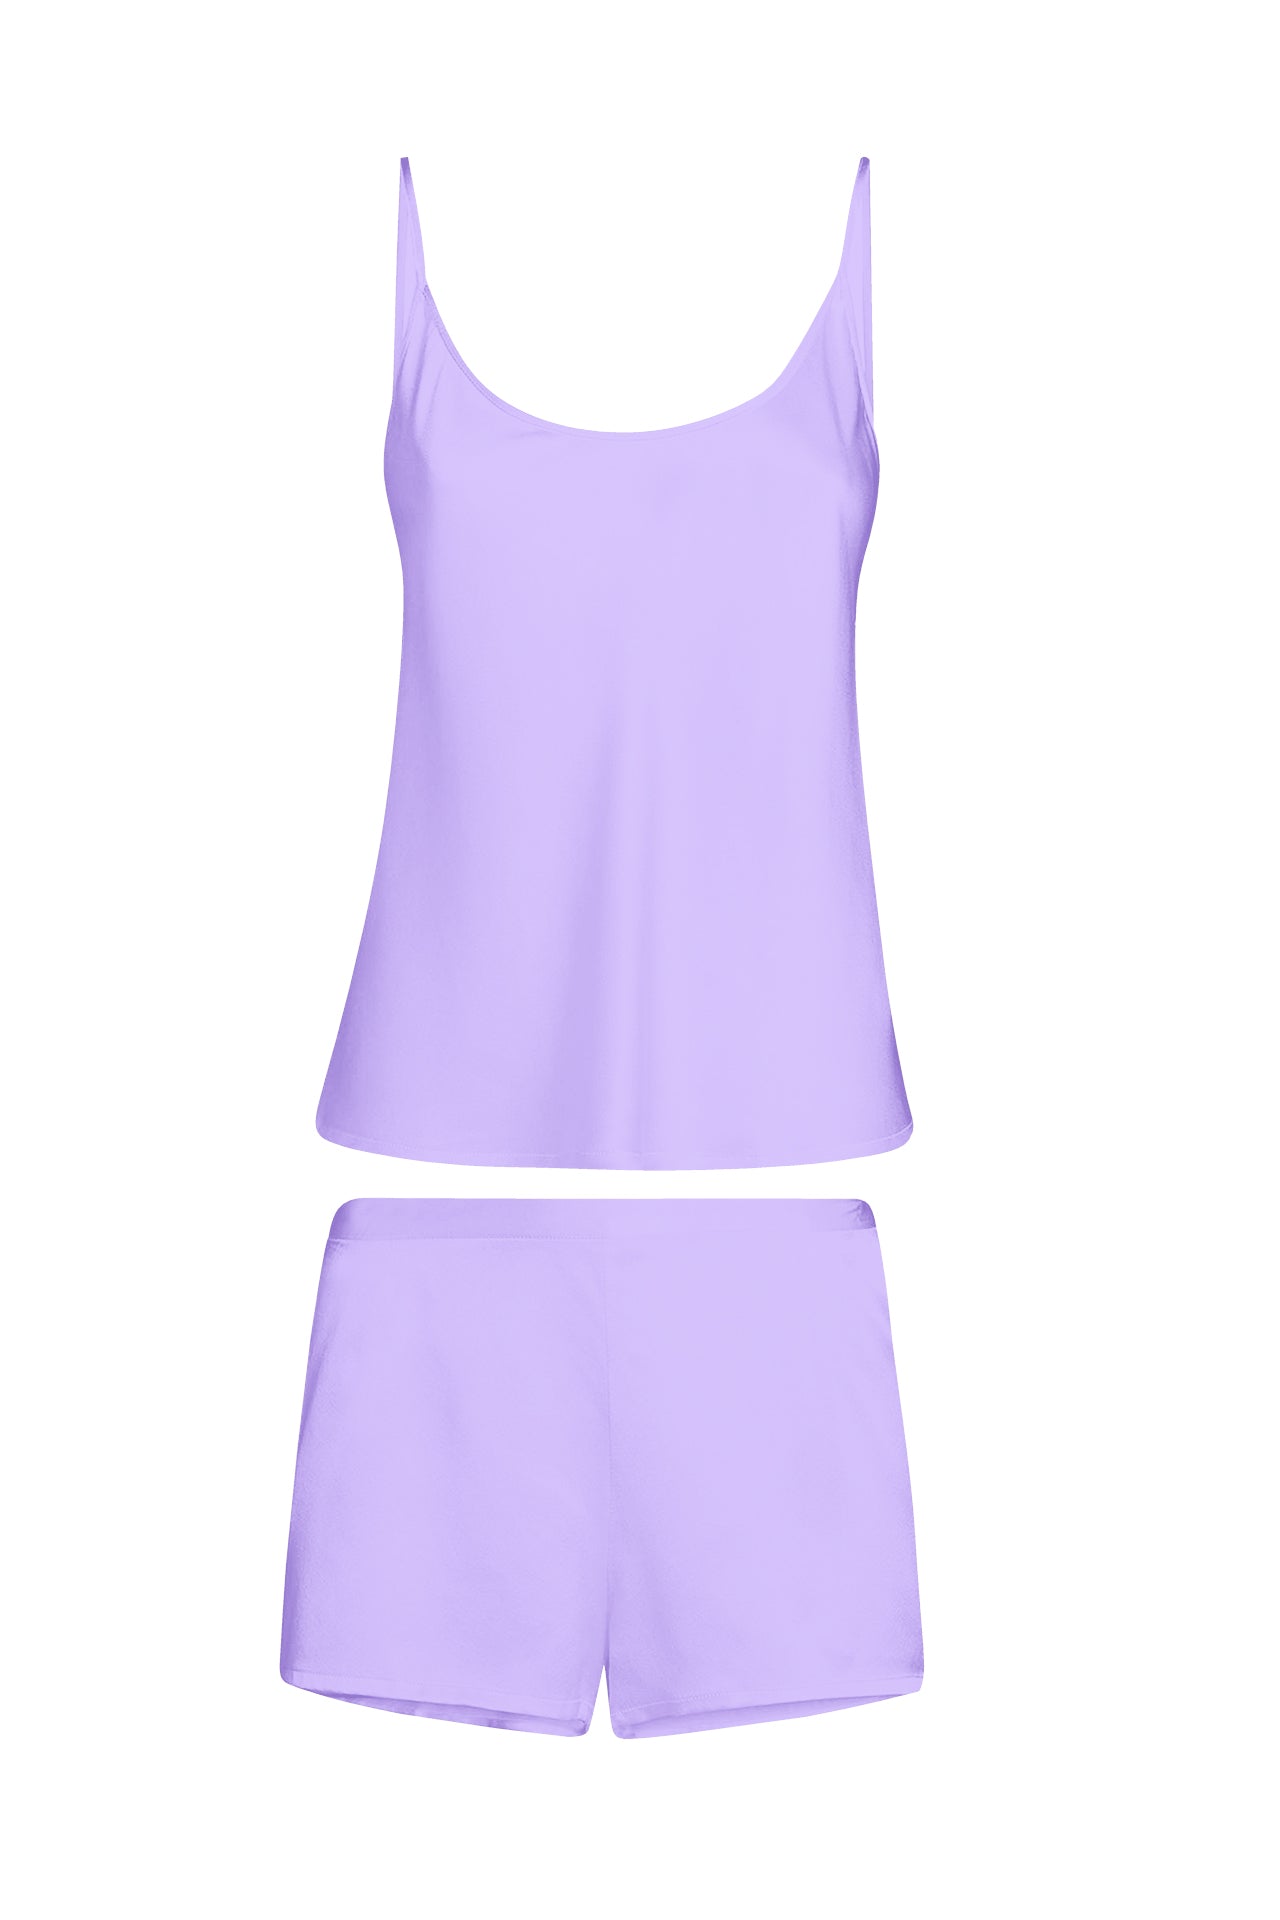 "Kyle X Shahida" "lavender silk camisole" "womens silk camisole" "lavender cami top"